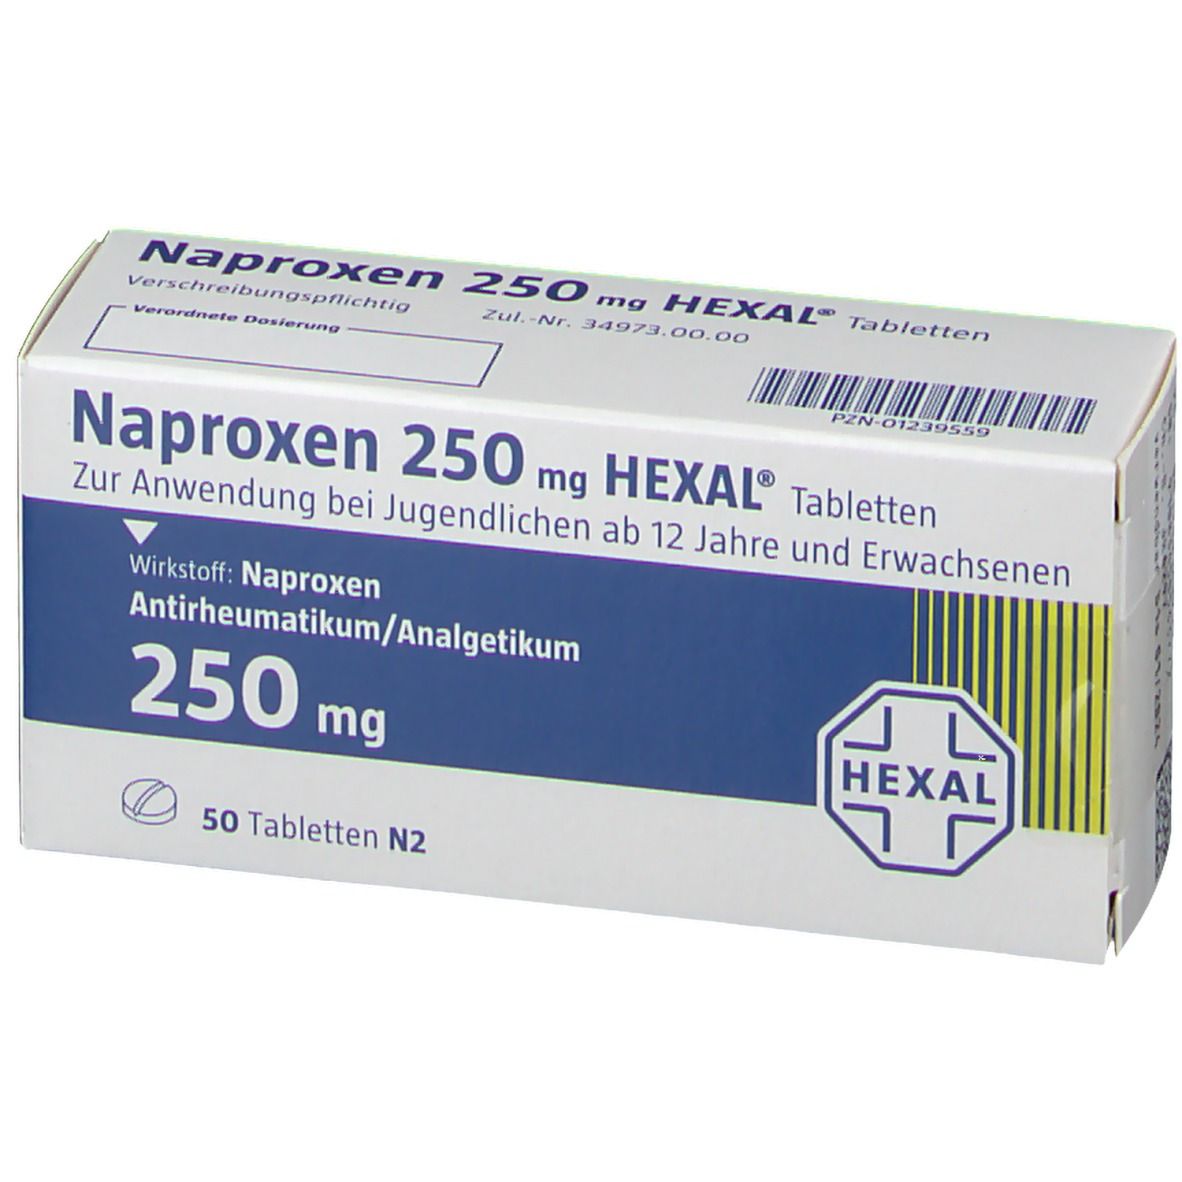 Naproxen 250 mg HEXAL®